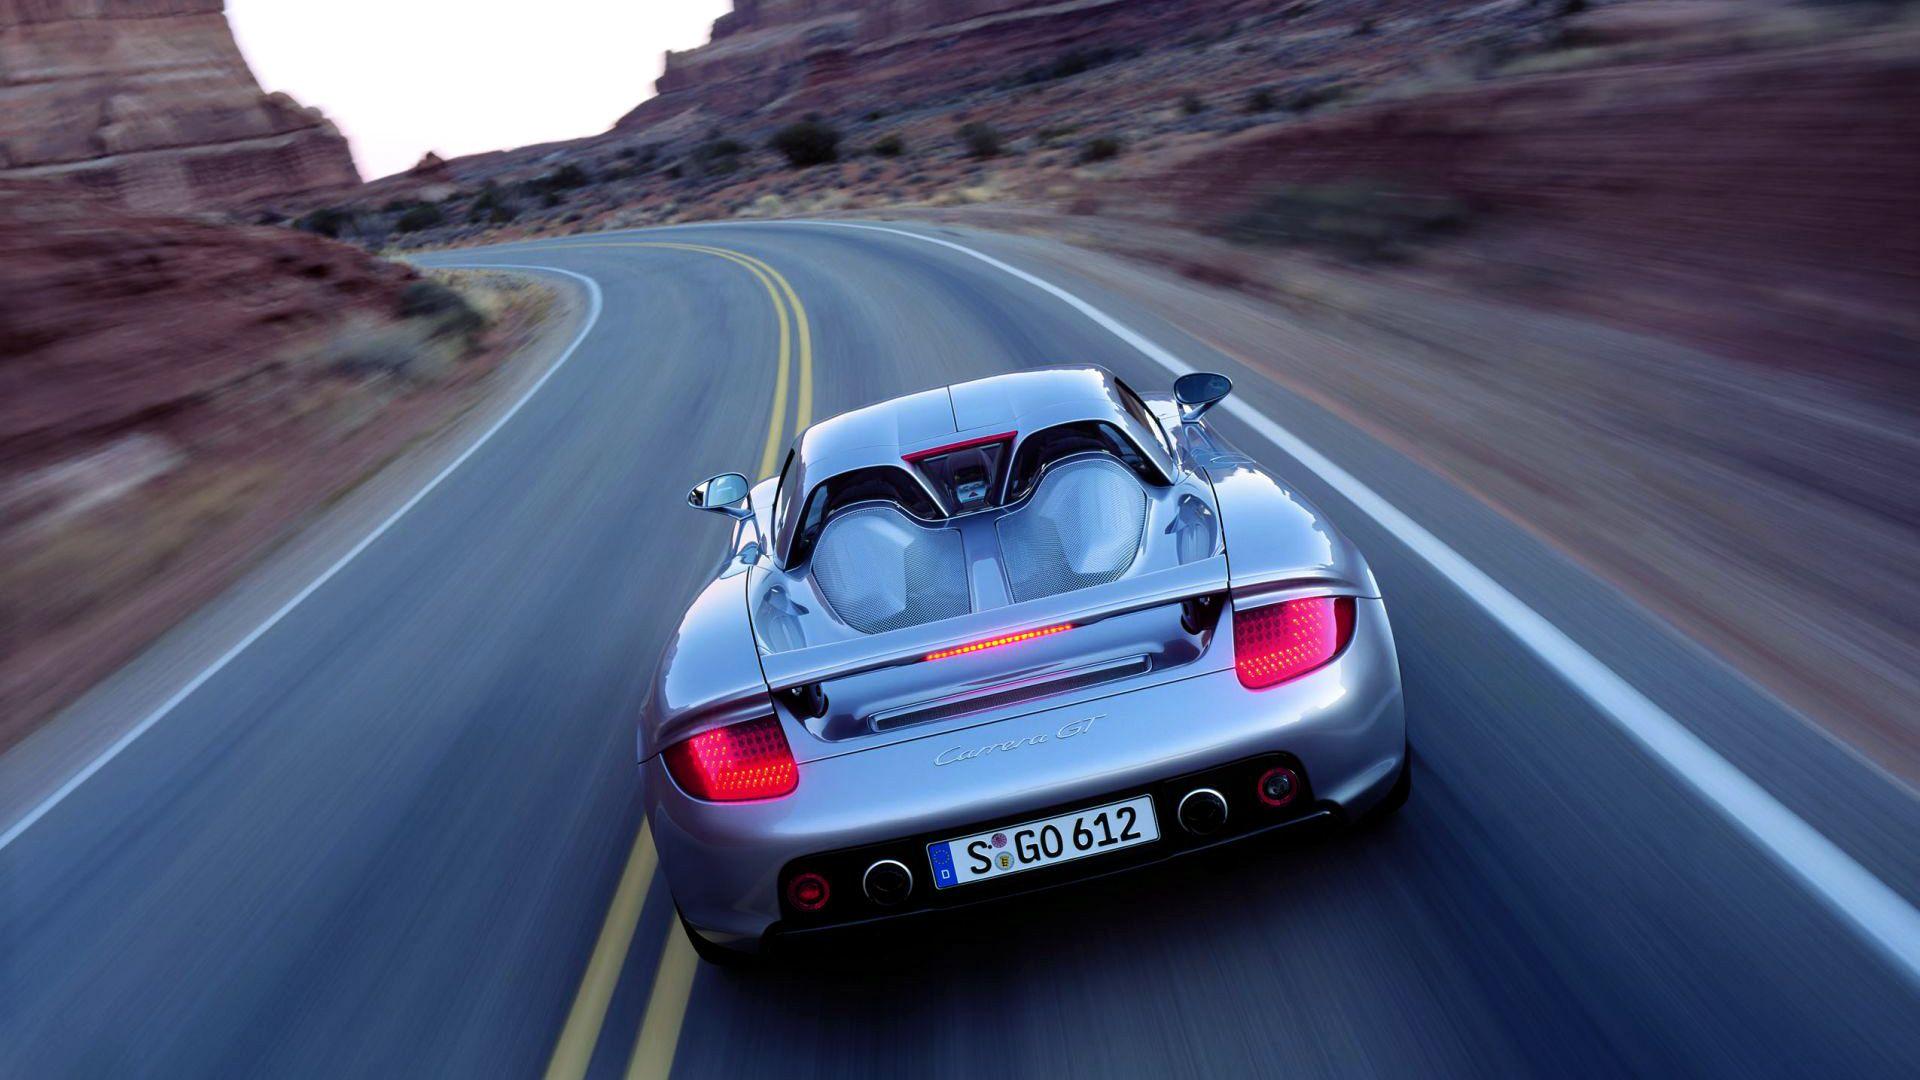 Porsche Carrera GT Wallpaper & HD Image